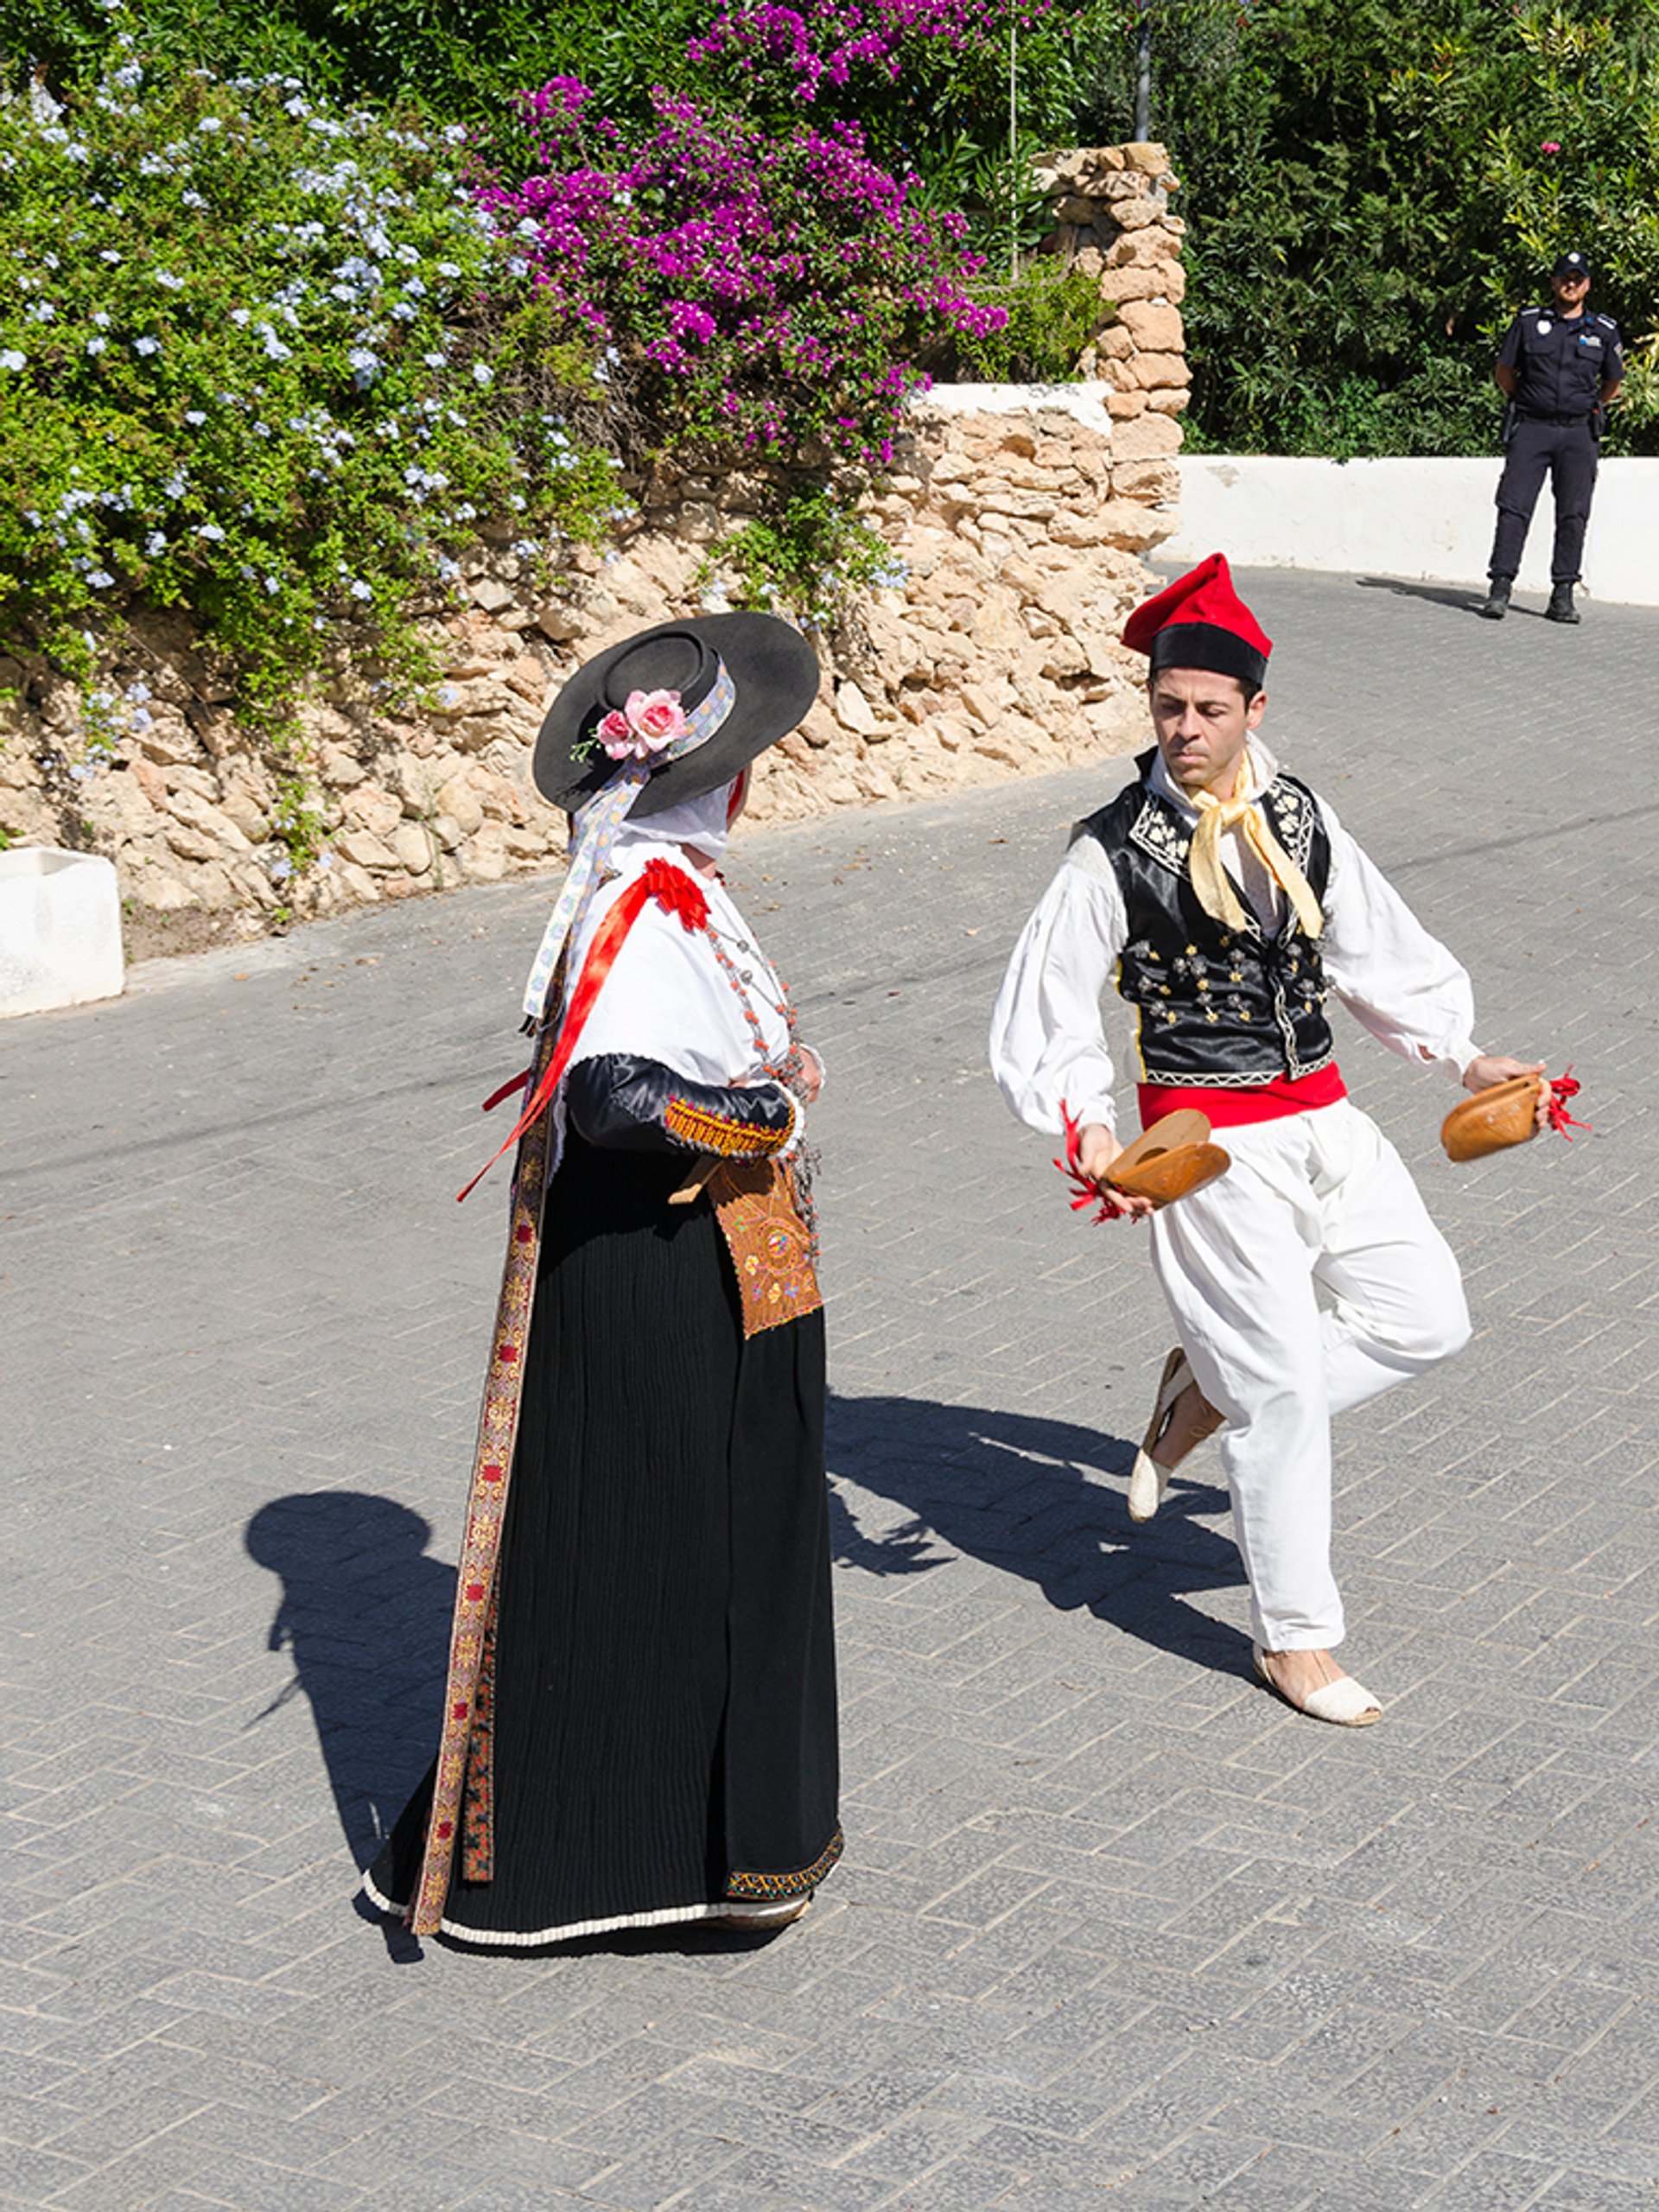 Ball Pagès: Traditional Ibizan Folk Dance